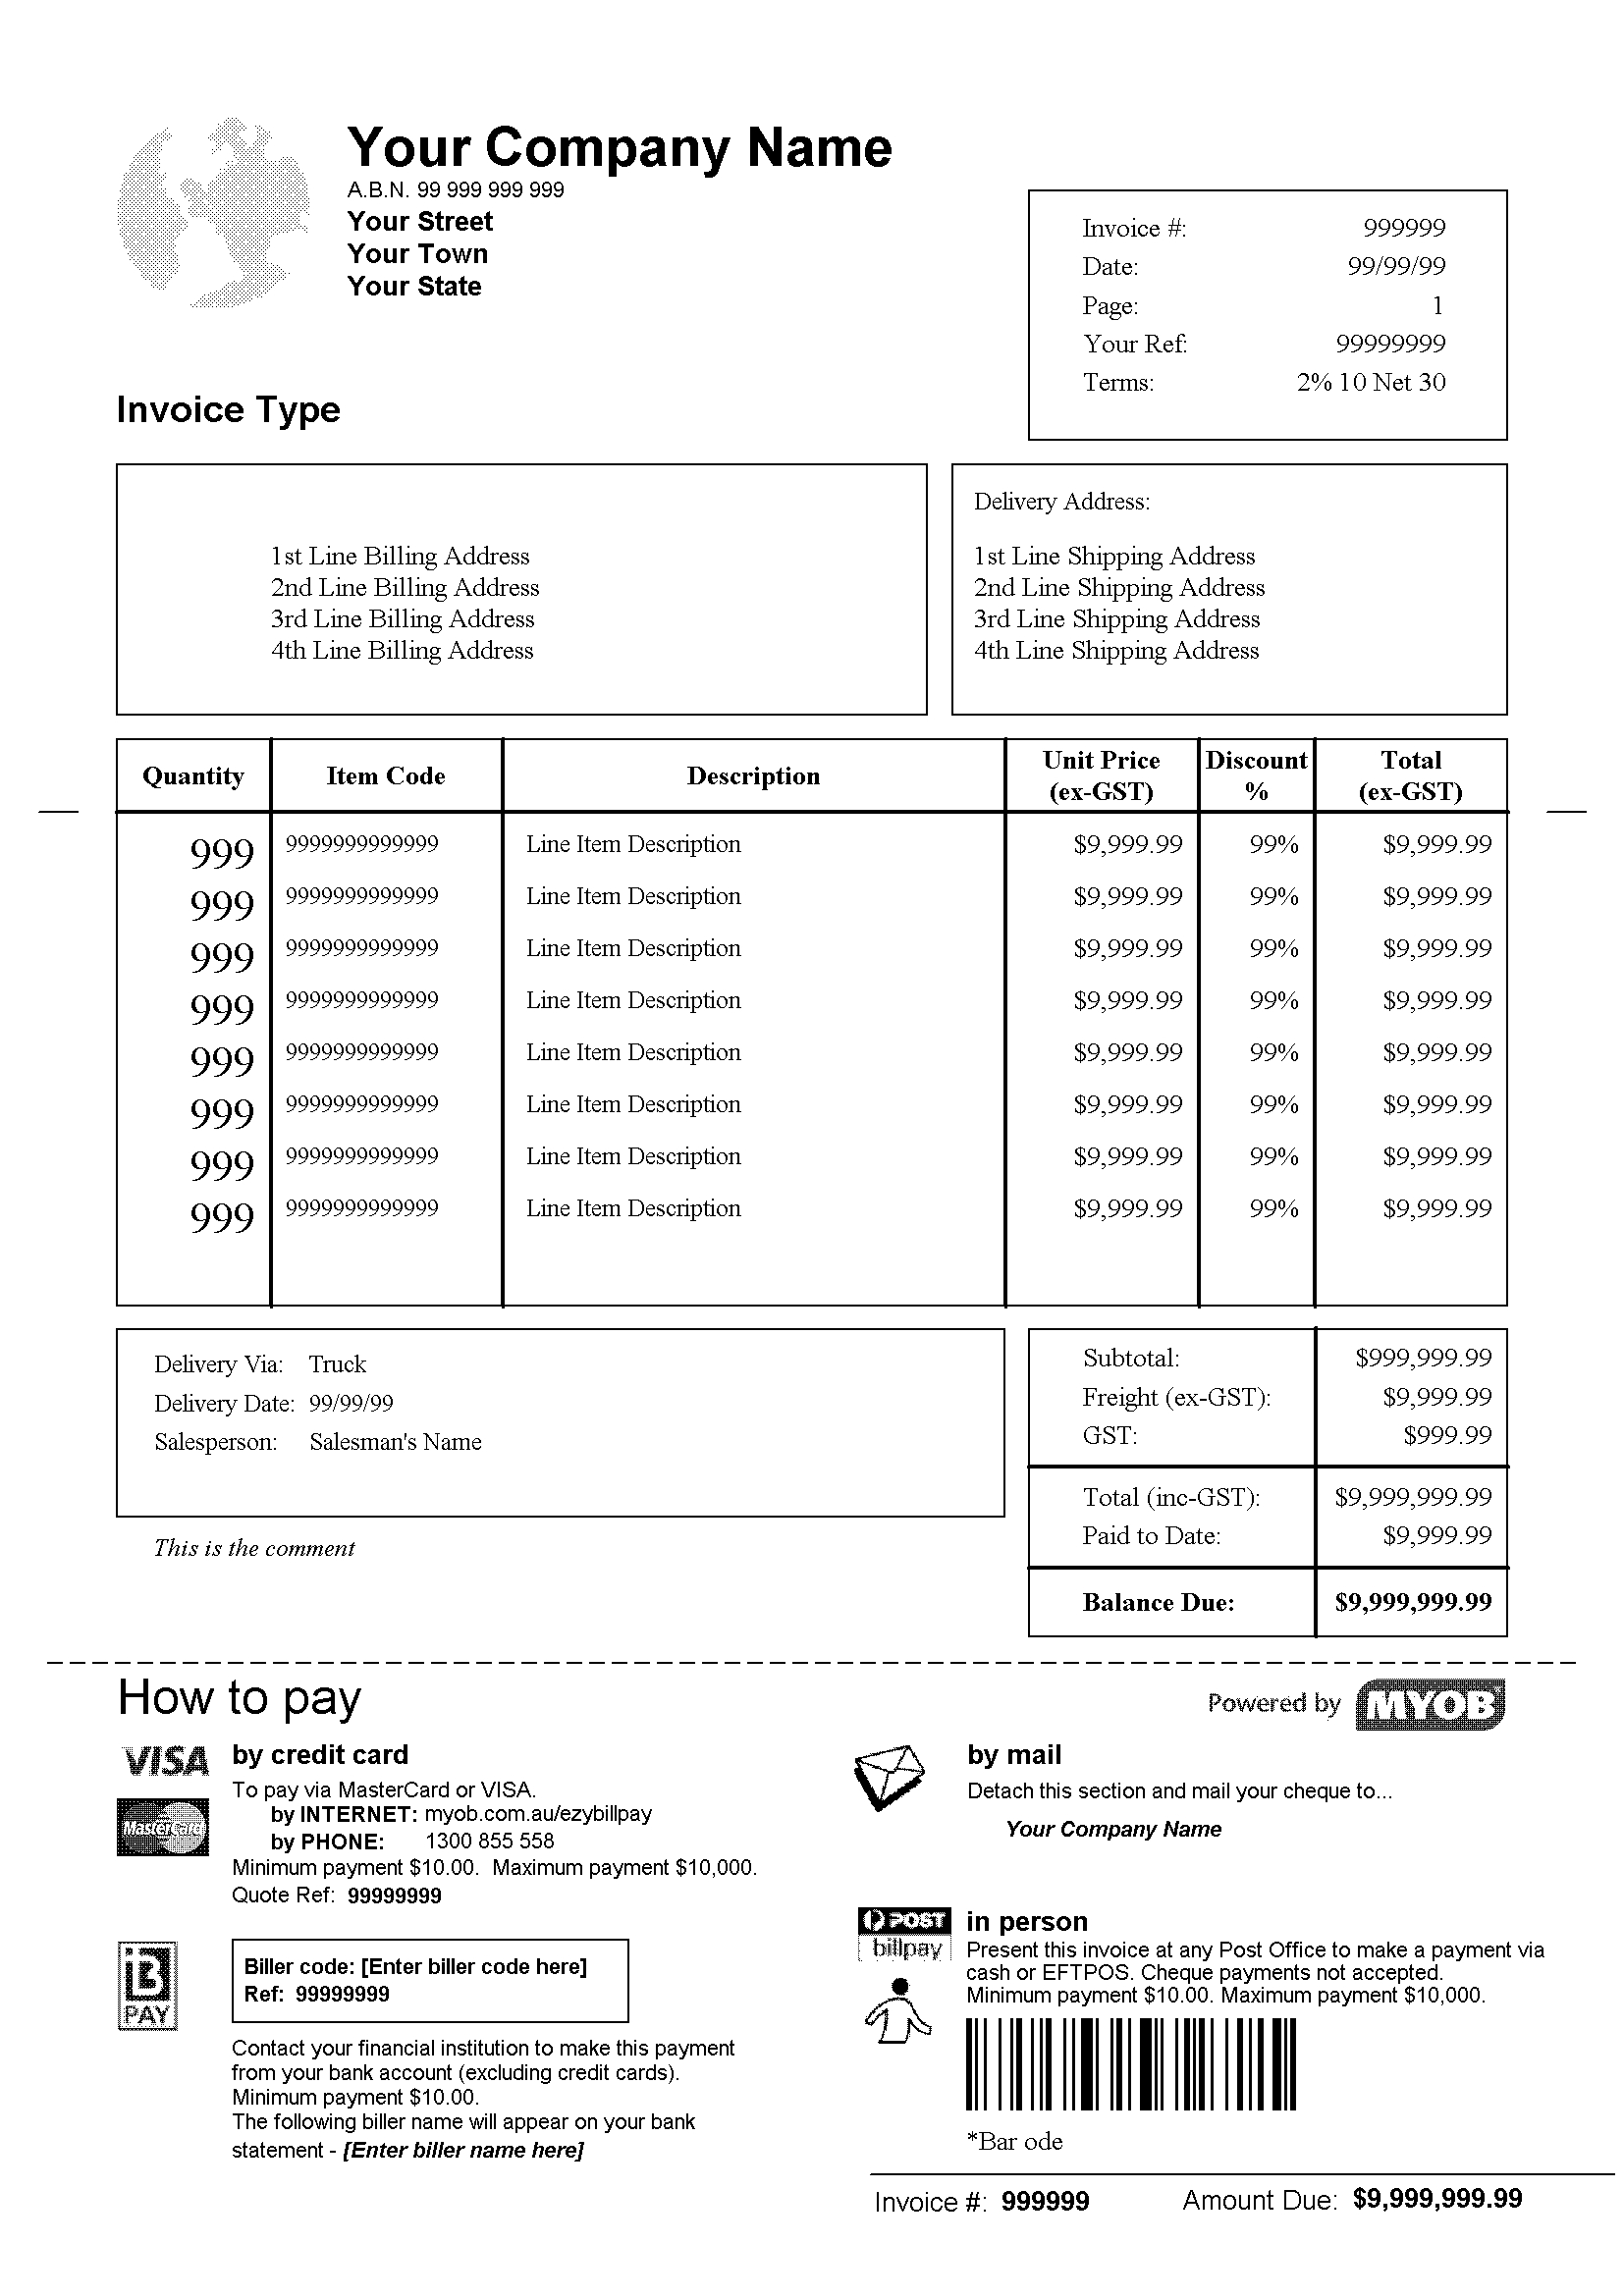 myob invoice template solved adjusting the line spacing on printed invoice myob community 1654 X 2339